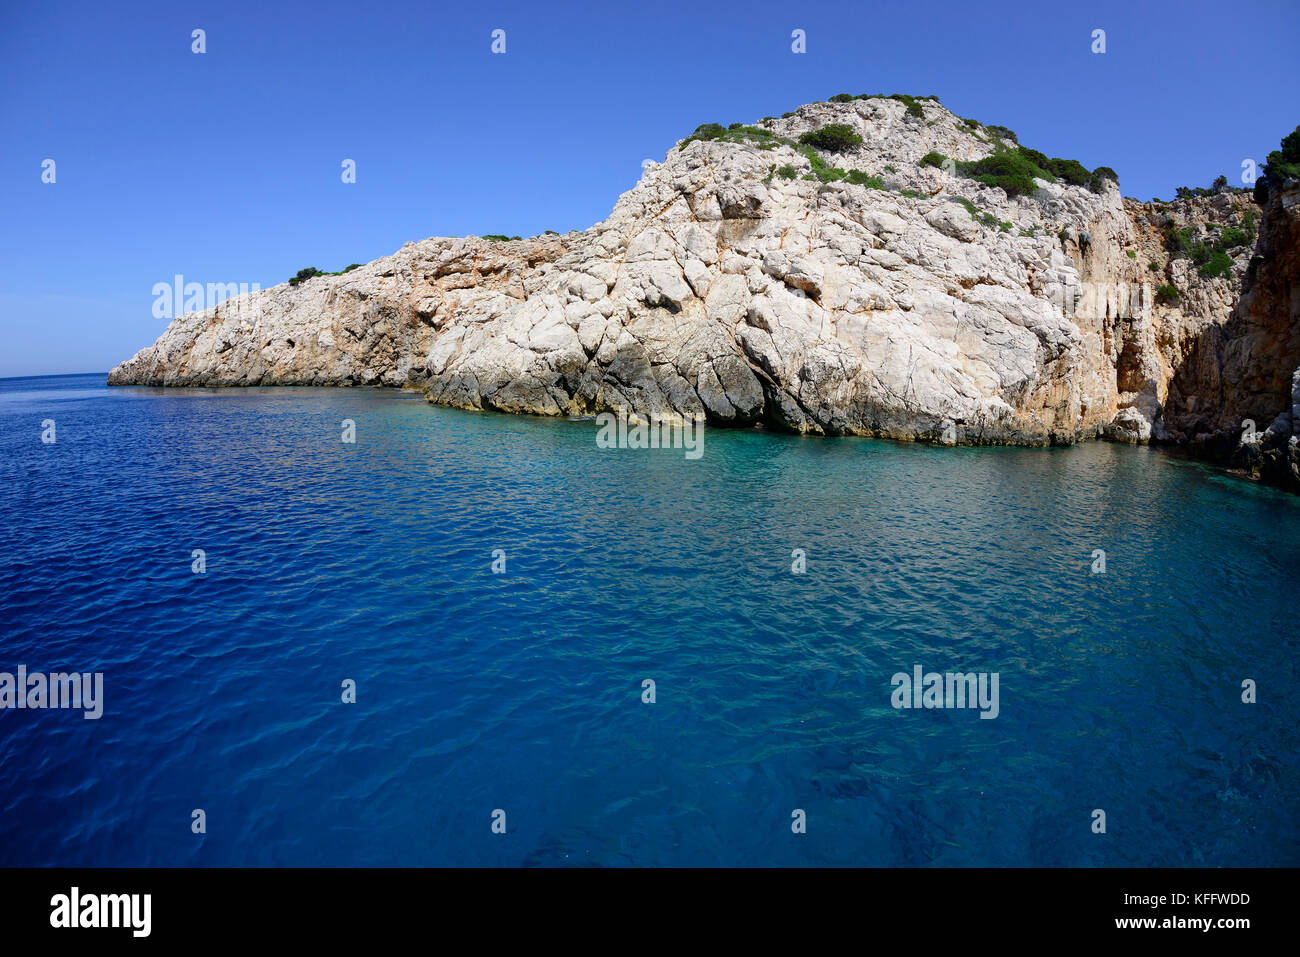 The quiet Bay of Island Susac, Nature Park Lastovo, Adriatic Sea, Mediterranean Sea, Island Susac, Nature Park Lastovo, Dalmatia, Croatia Stock Photo